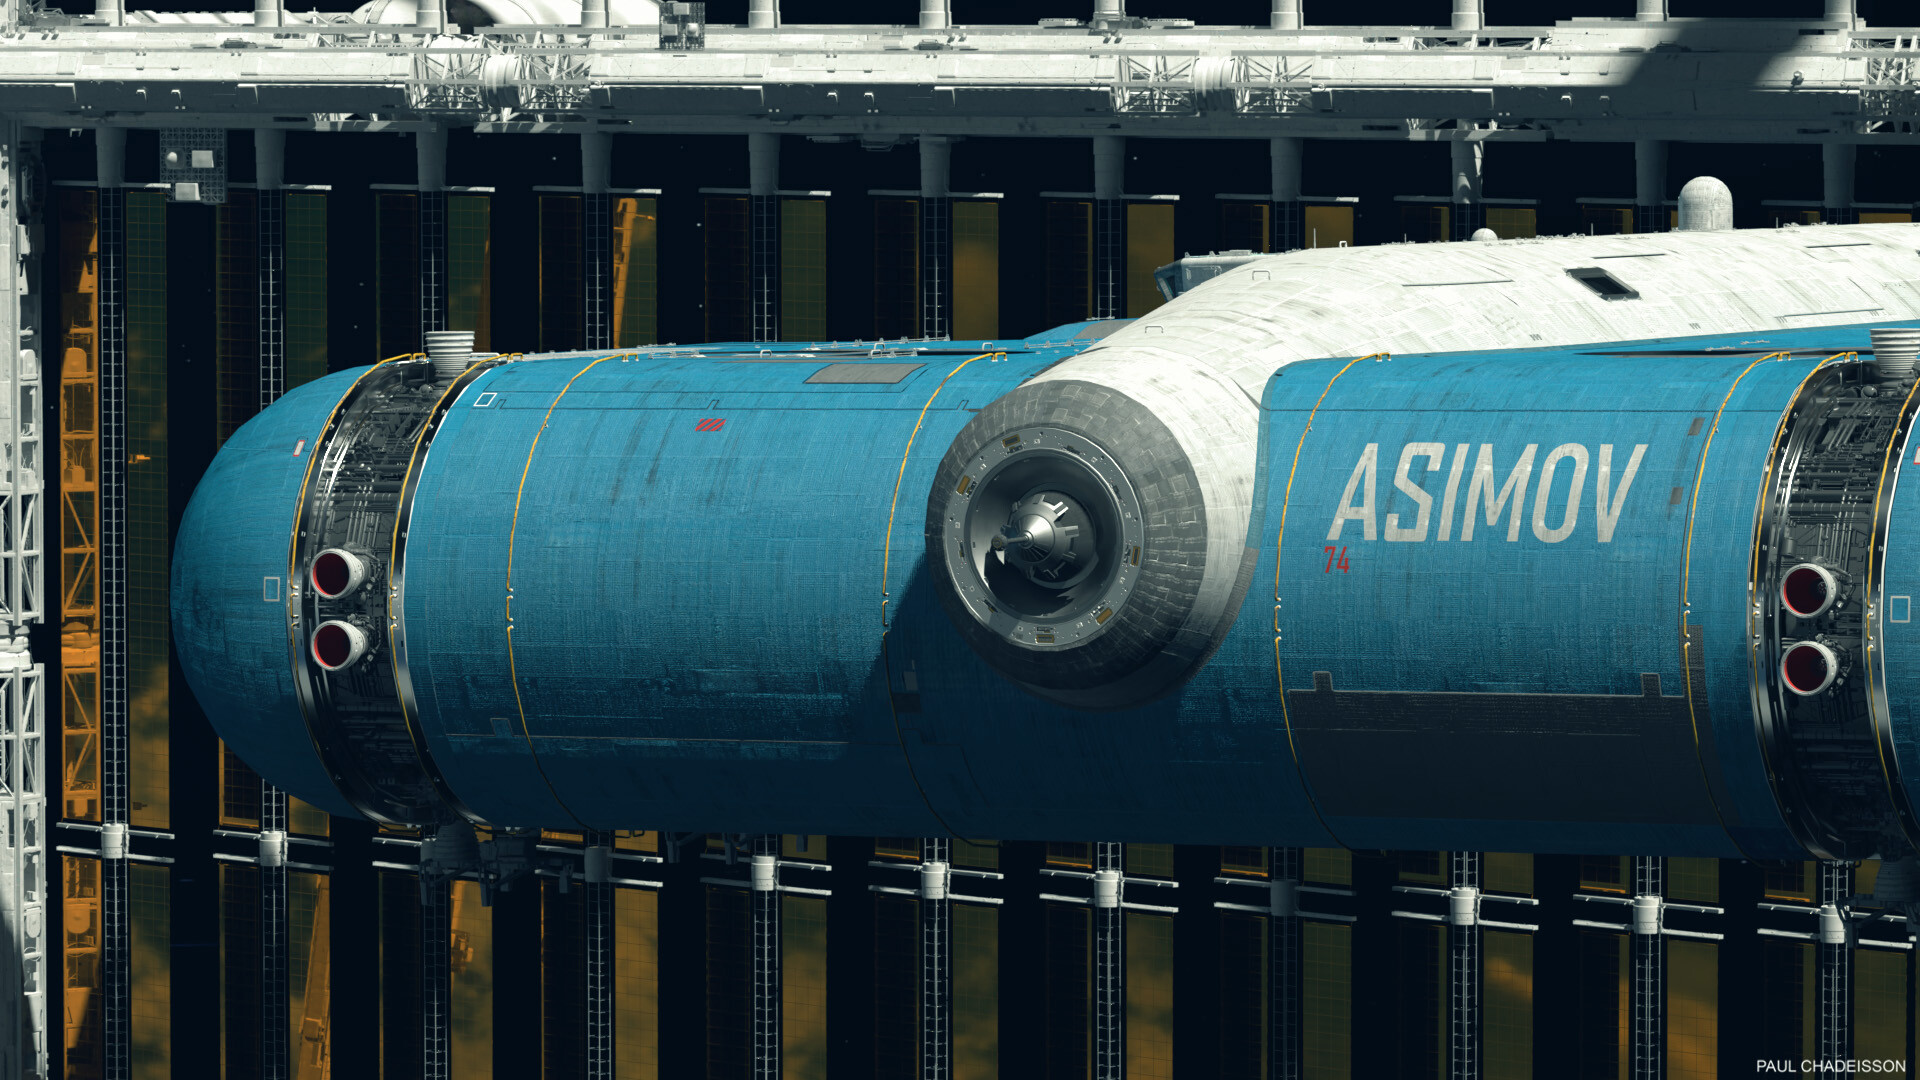 Asimov ship by Paul Chadeisson